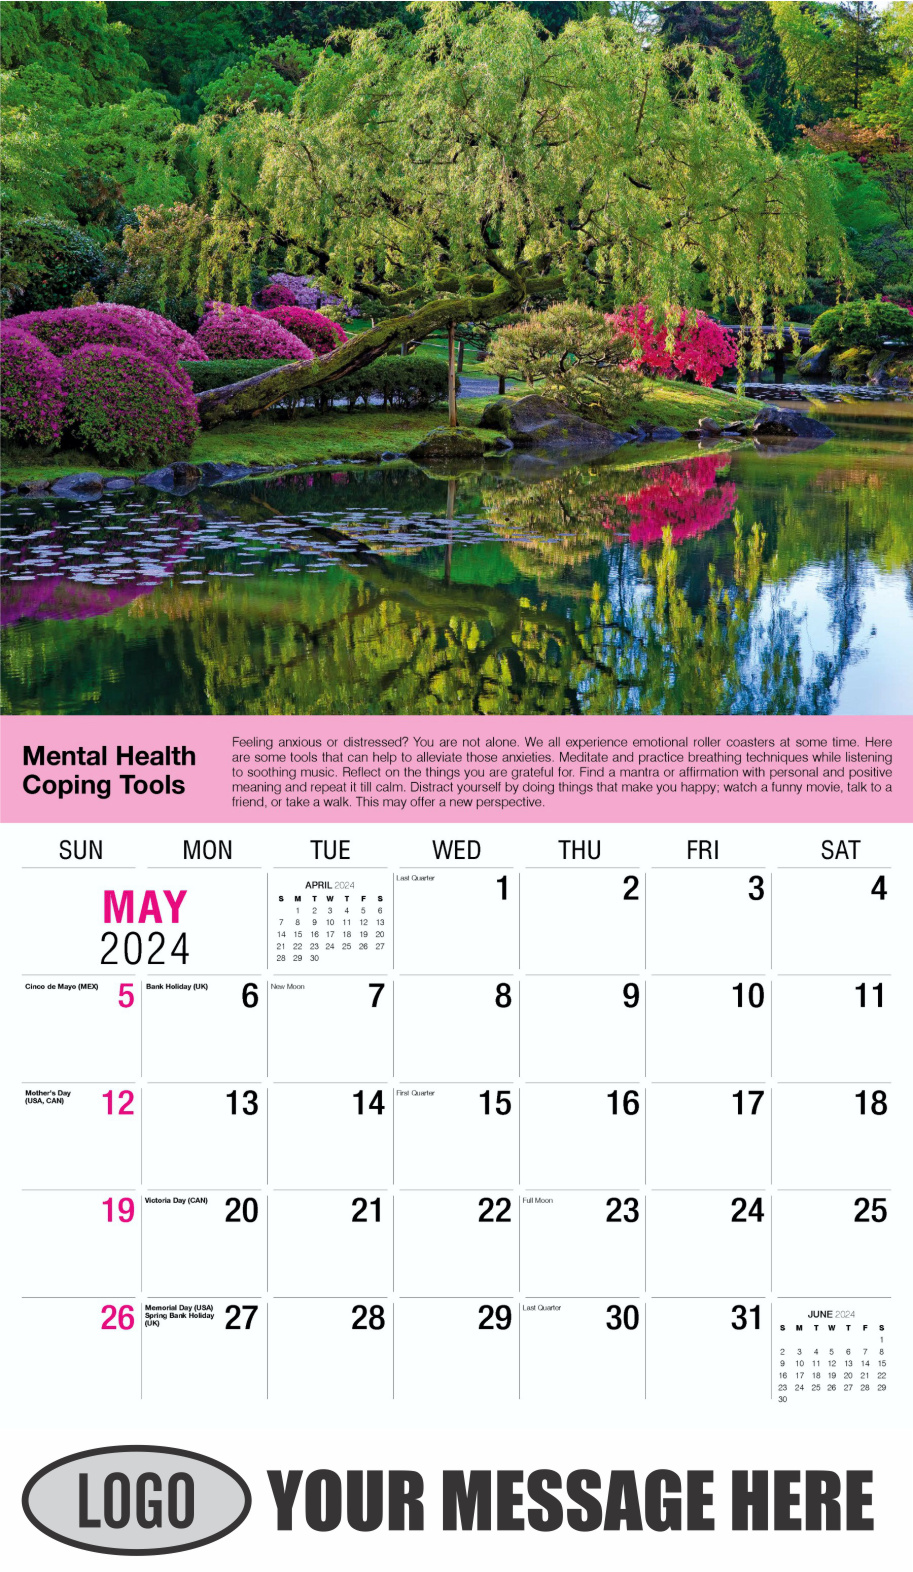 Health Tips 2024 Business Promo Wall Calendar - May